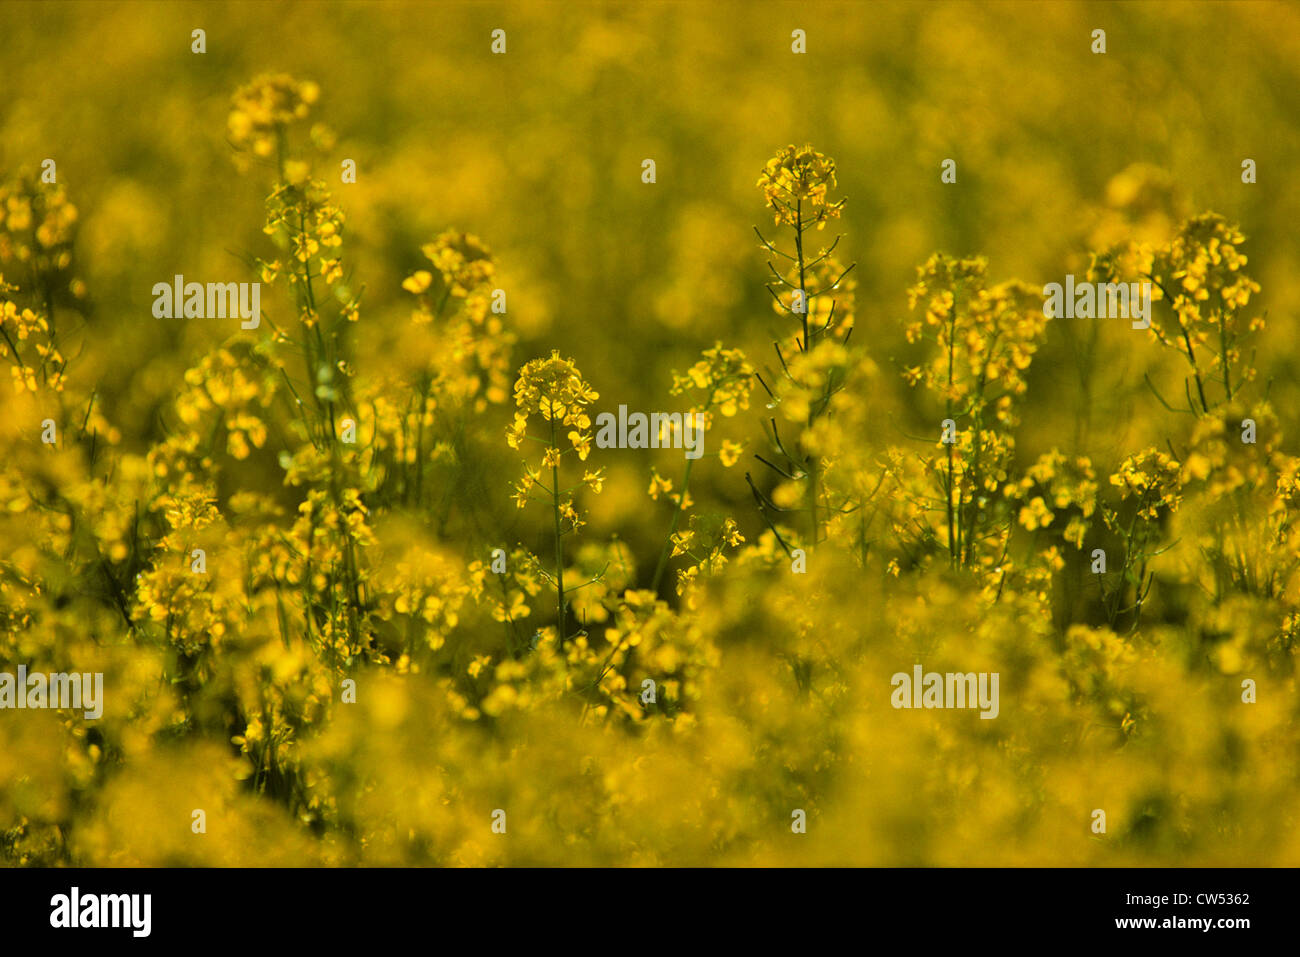 Kanada, Alberta, gelbe Blume auf Raps (Brassica Campestris) Feld Stockfoto